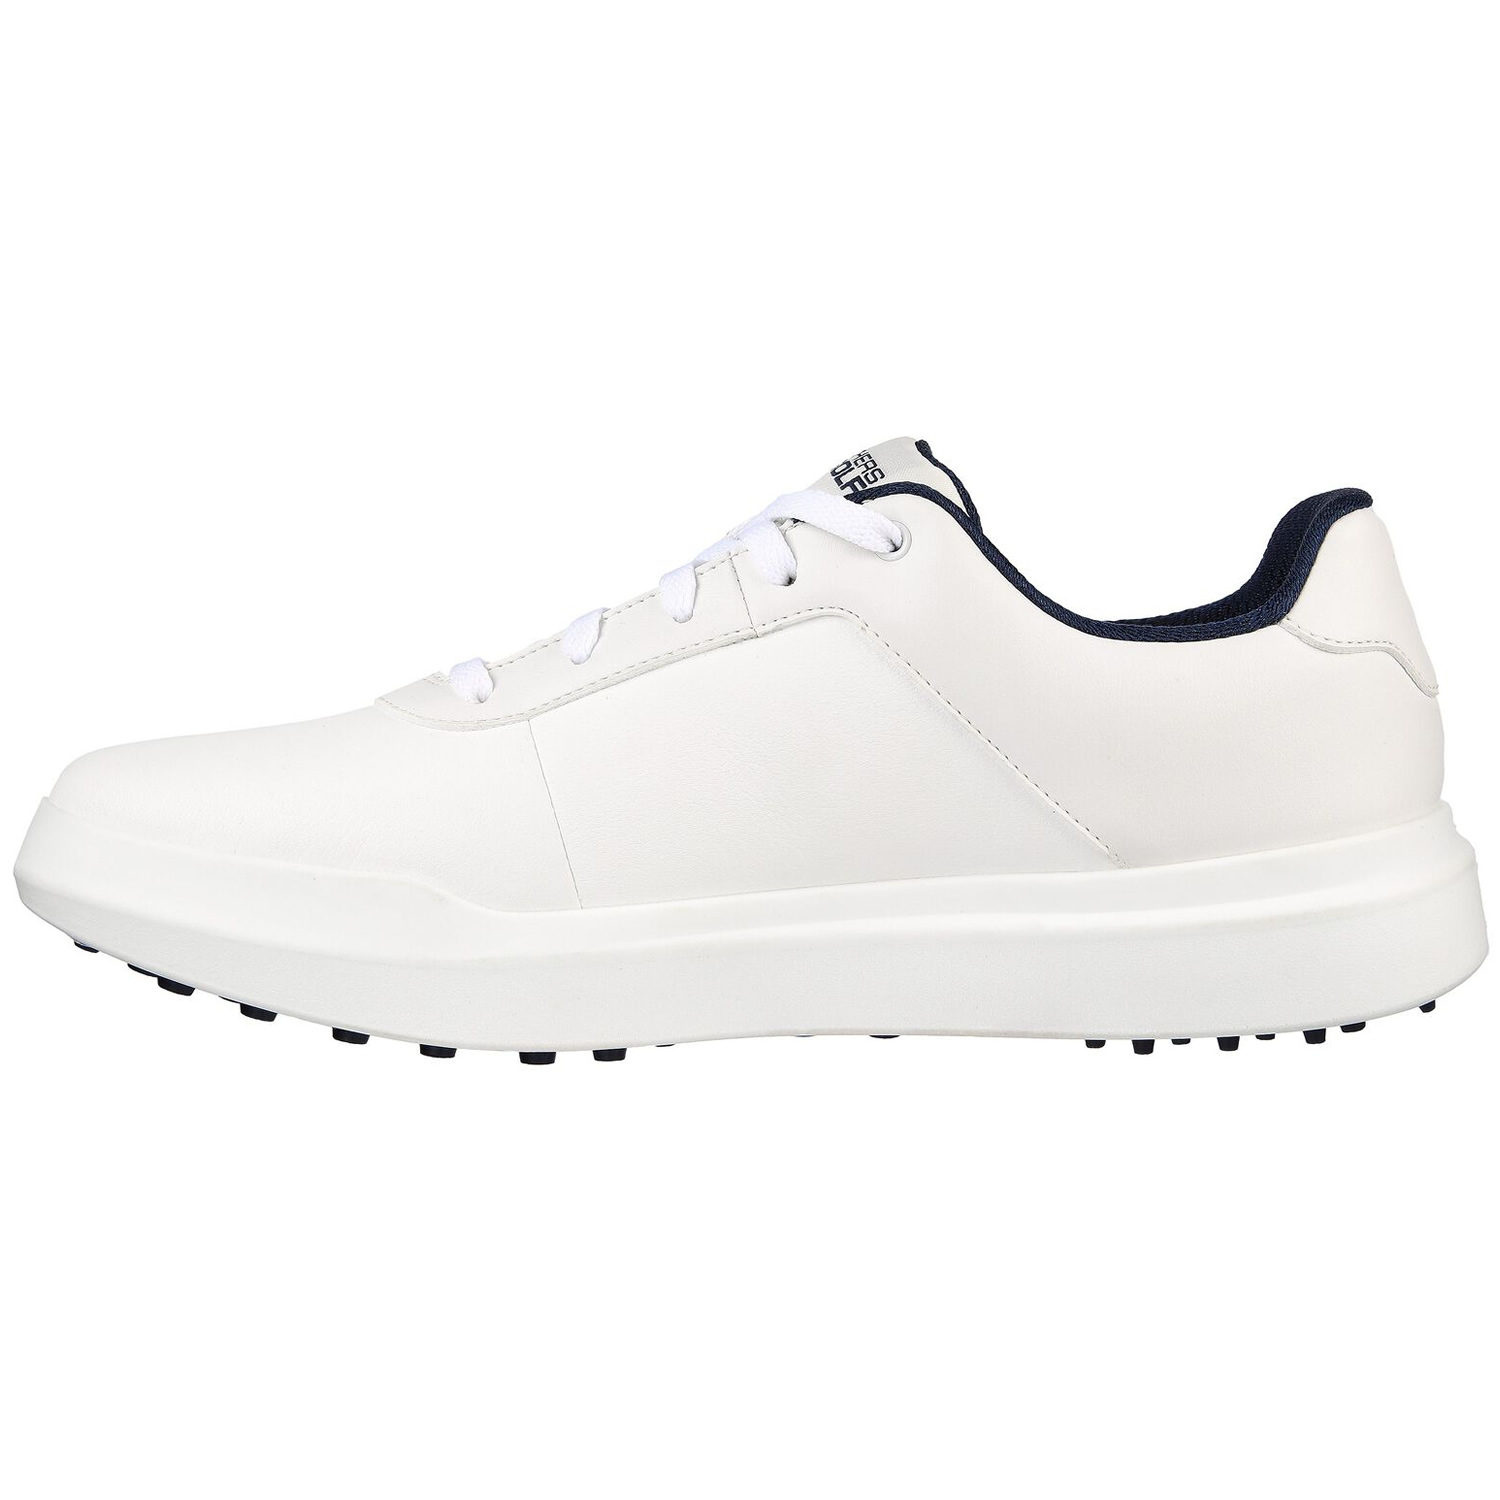 Skechers GO GOLF Drive 5 Golf Shoes White/Navy | Scottsdale Golf